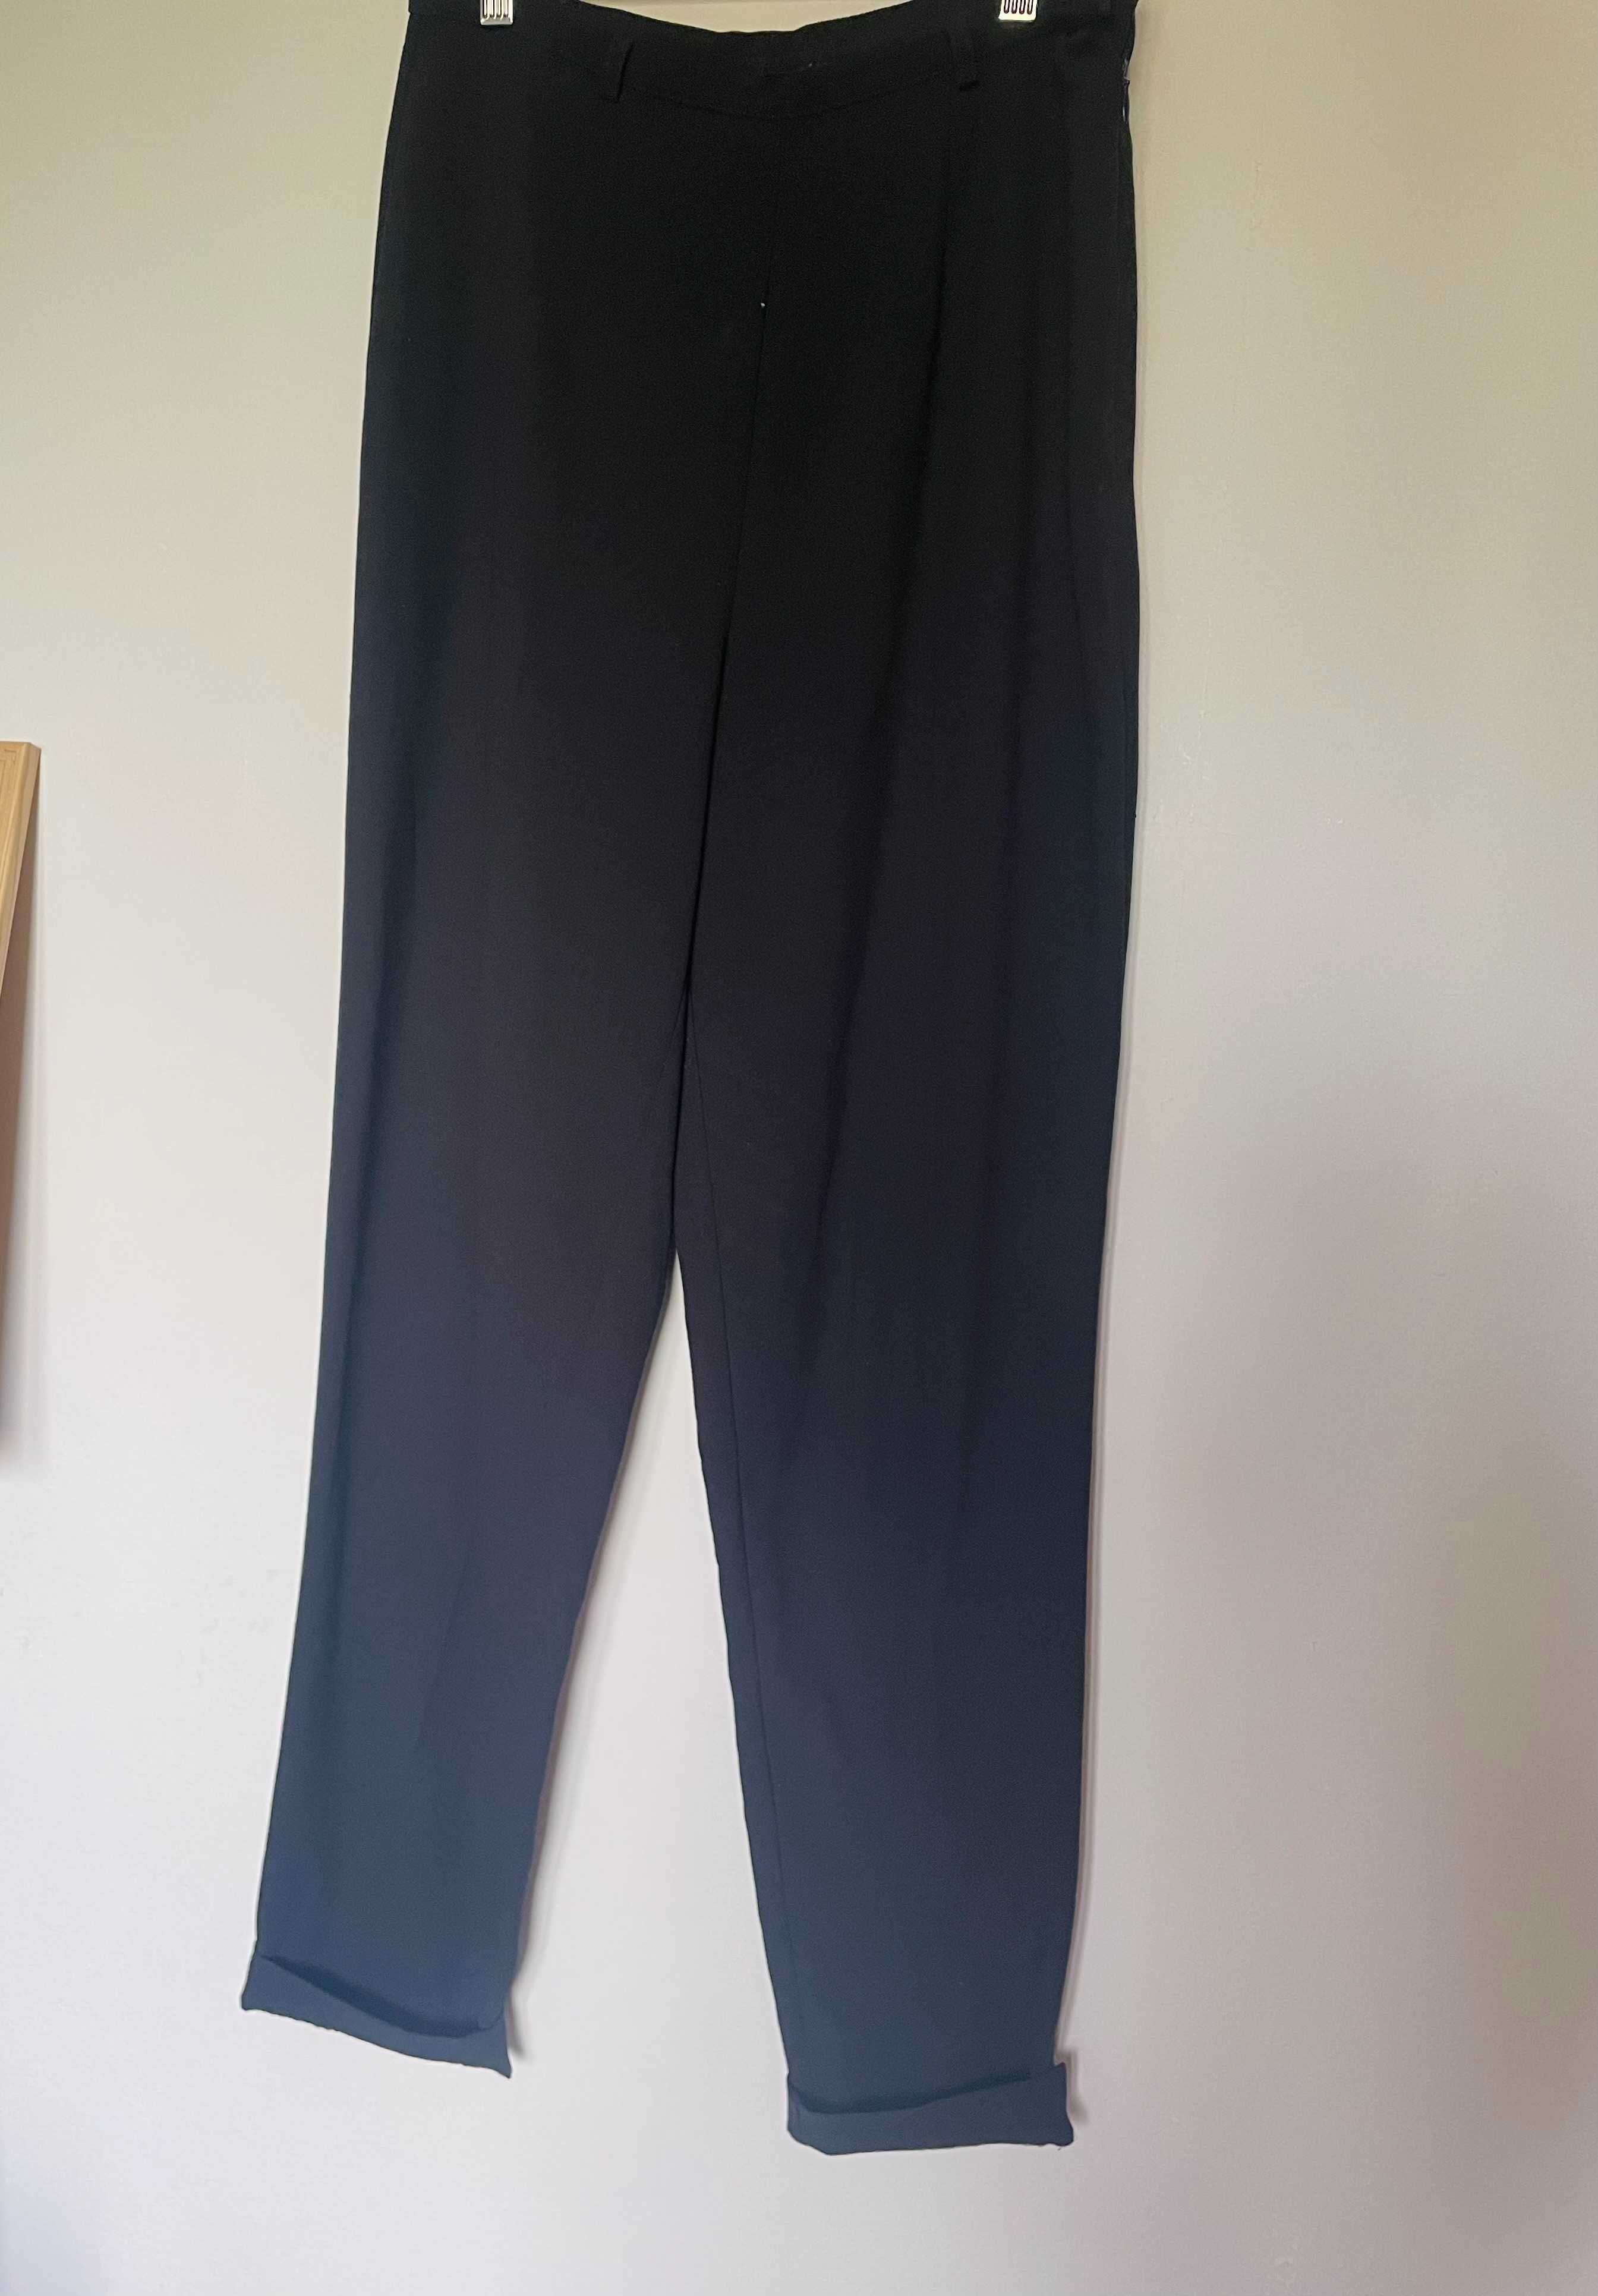 Spodnie damskie czarne eleganckie